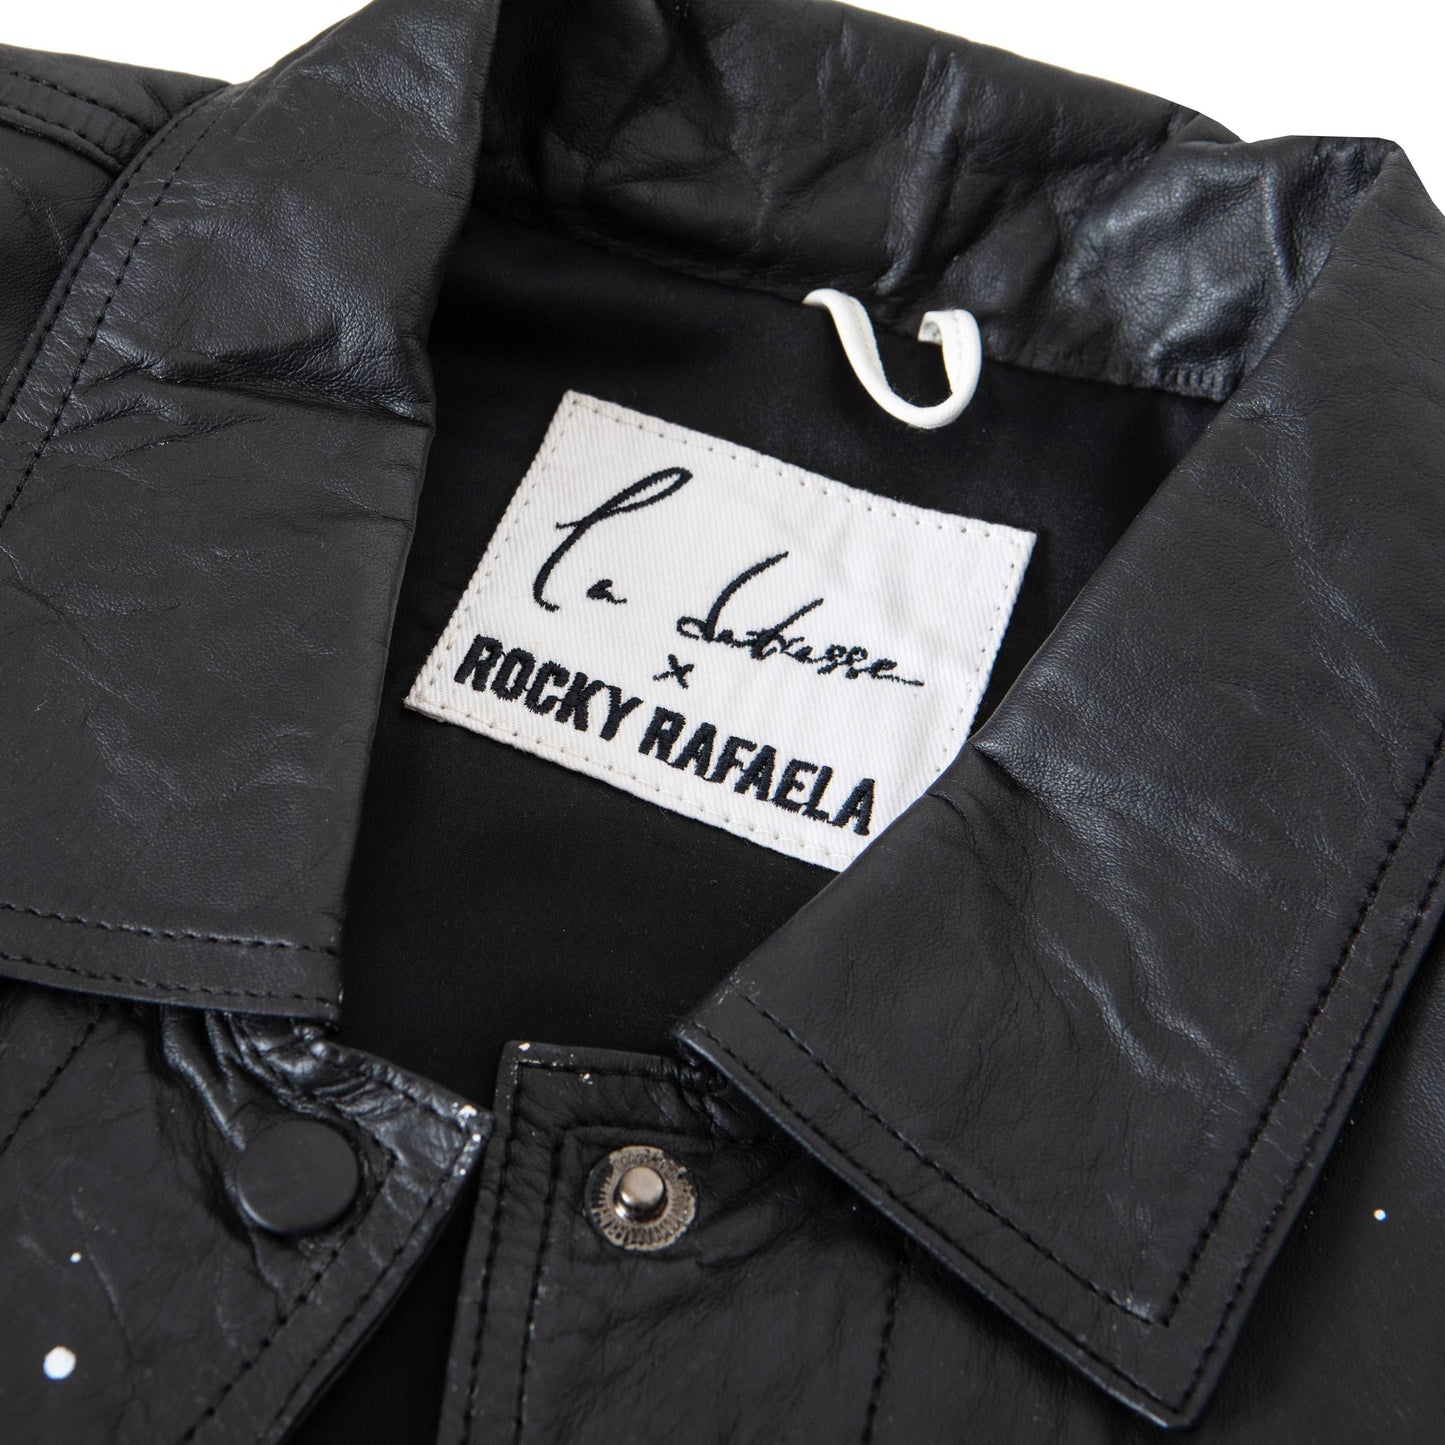 Rocky Rafaela x La Detresse Carved Paint Drop Jacket